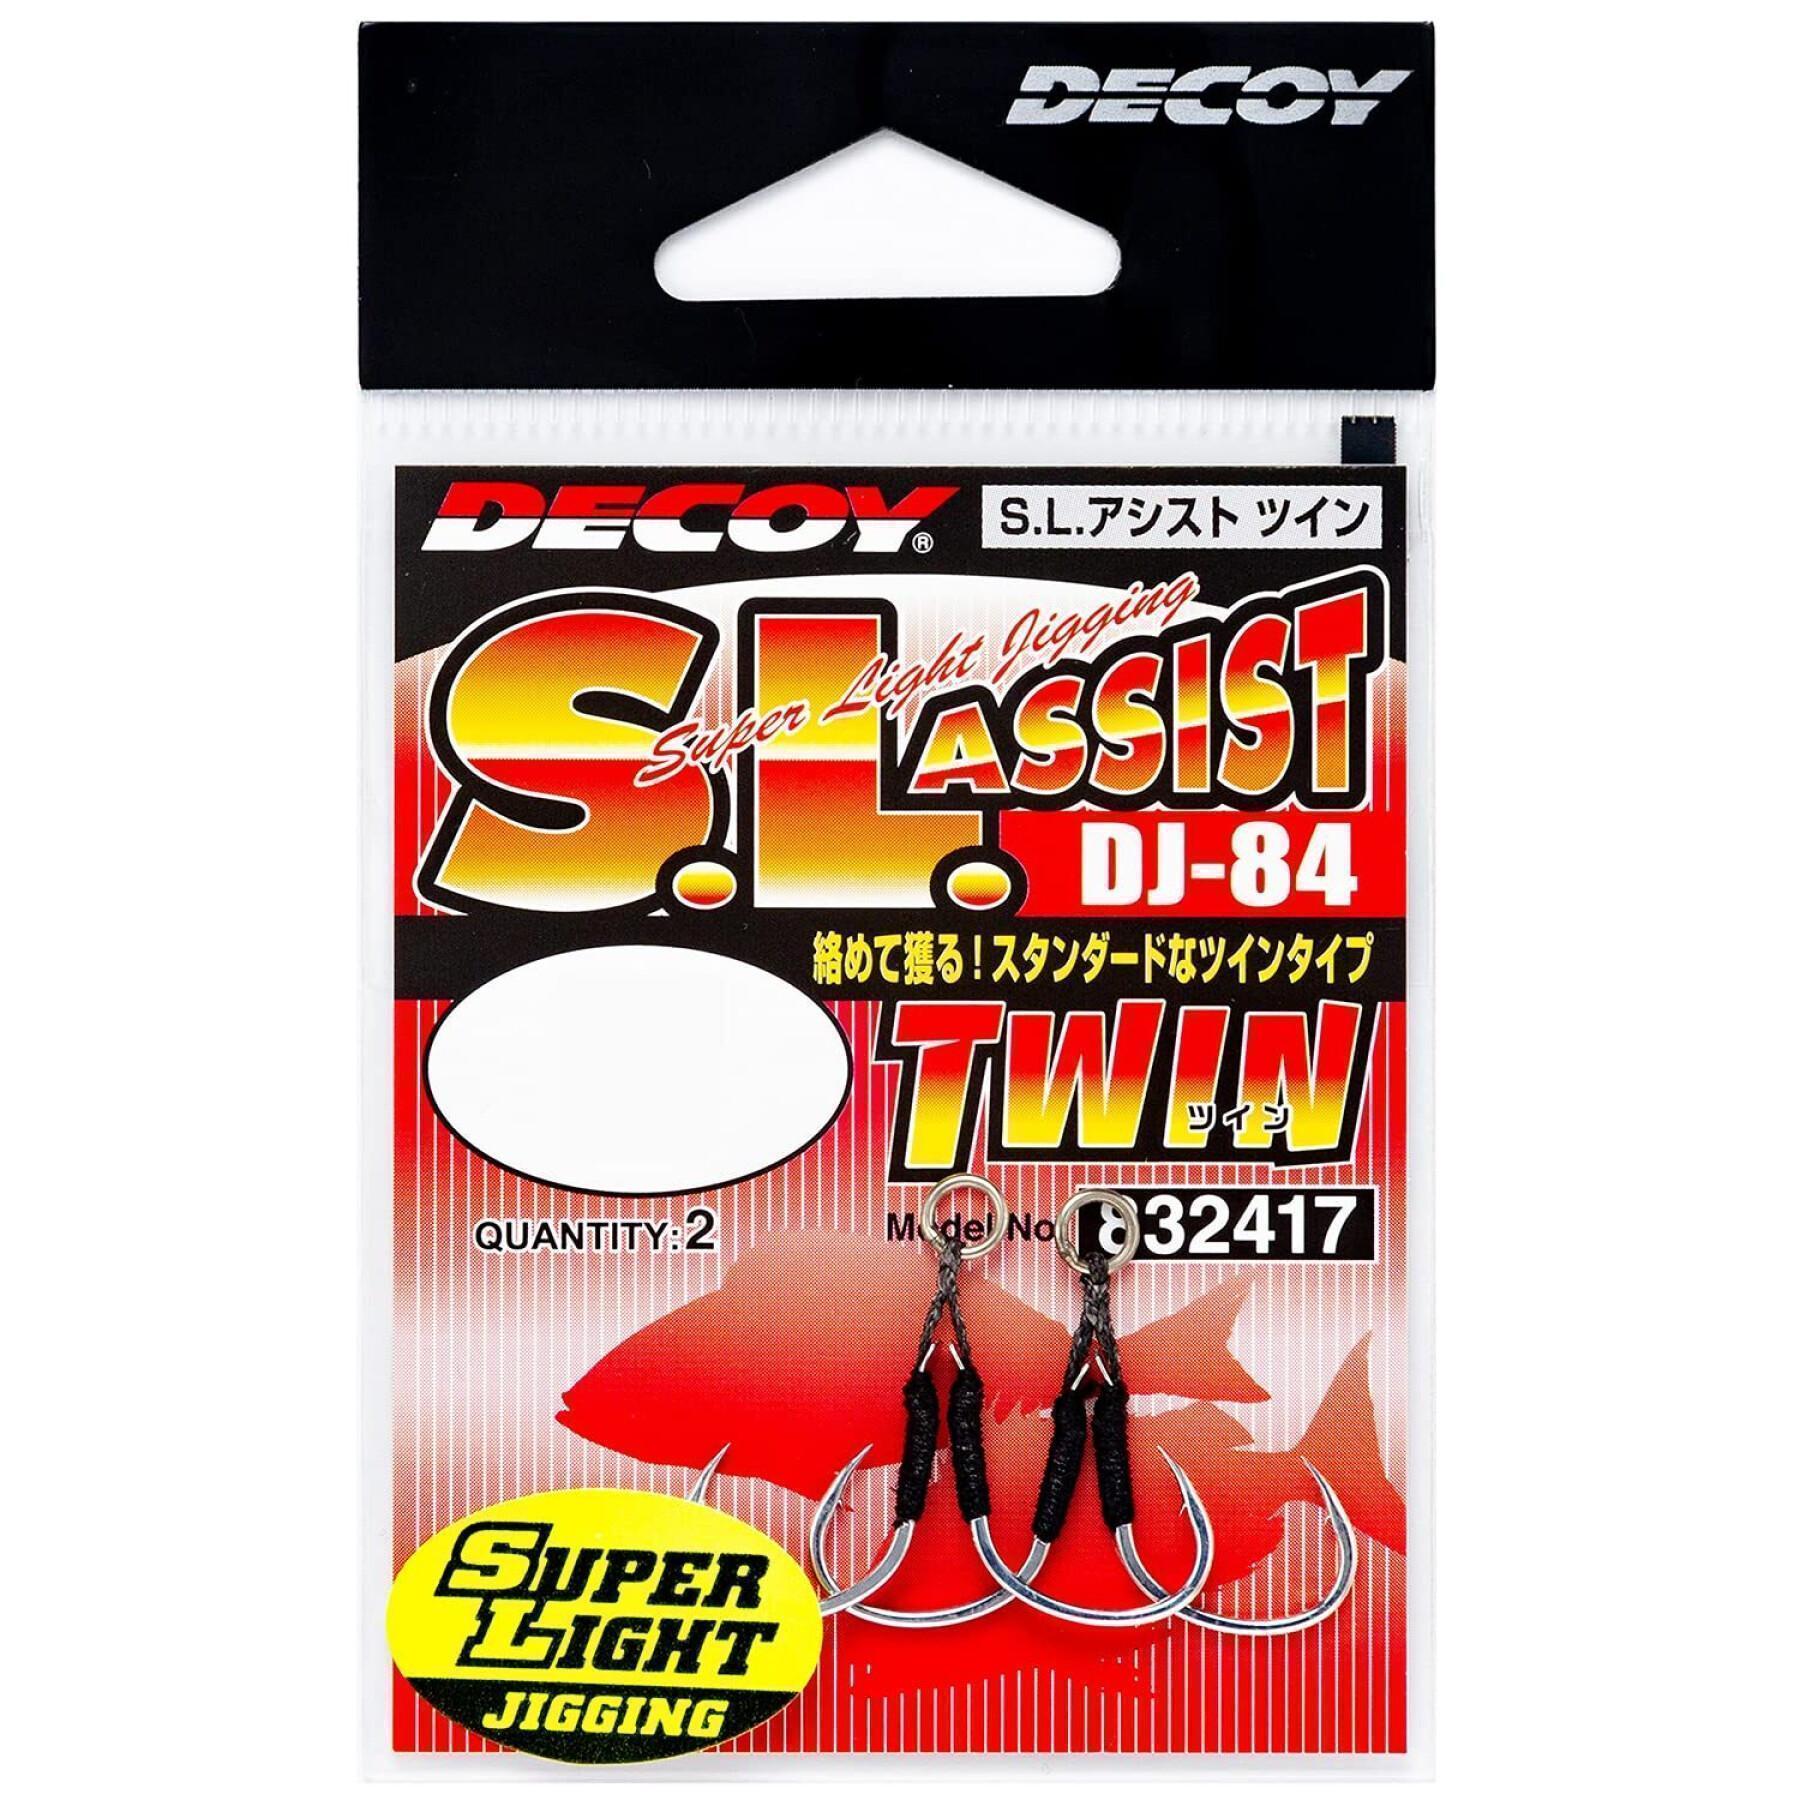 Hooks Decoy DJ 84 Super light assist (x3)